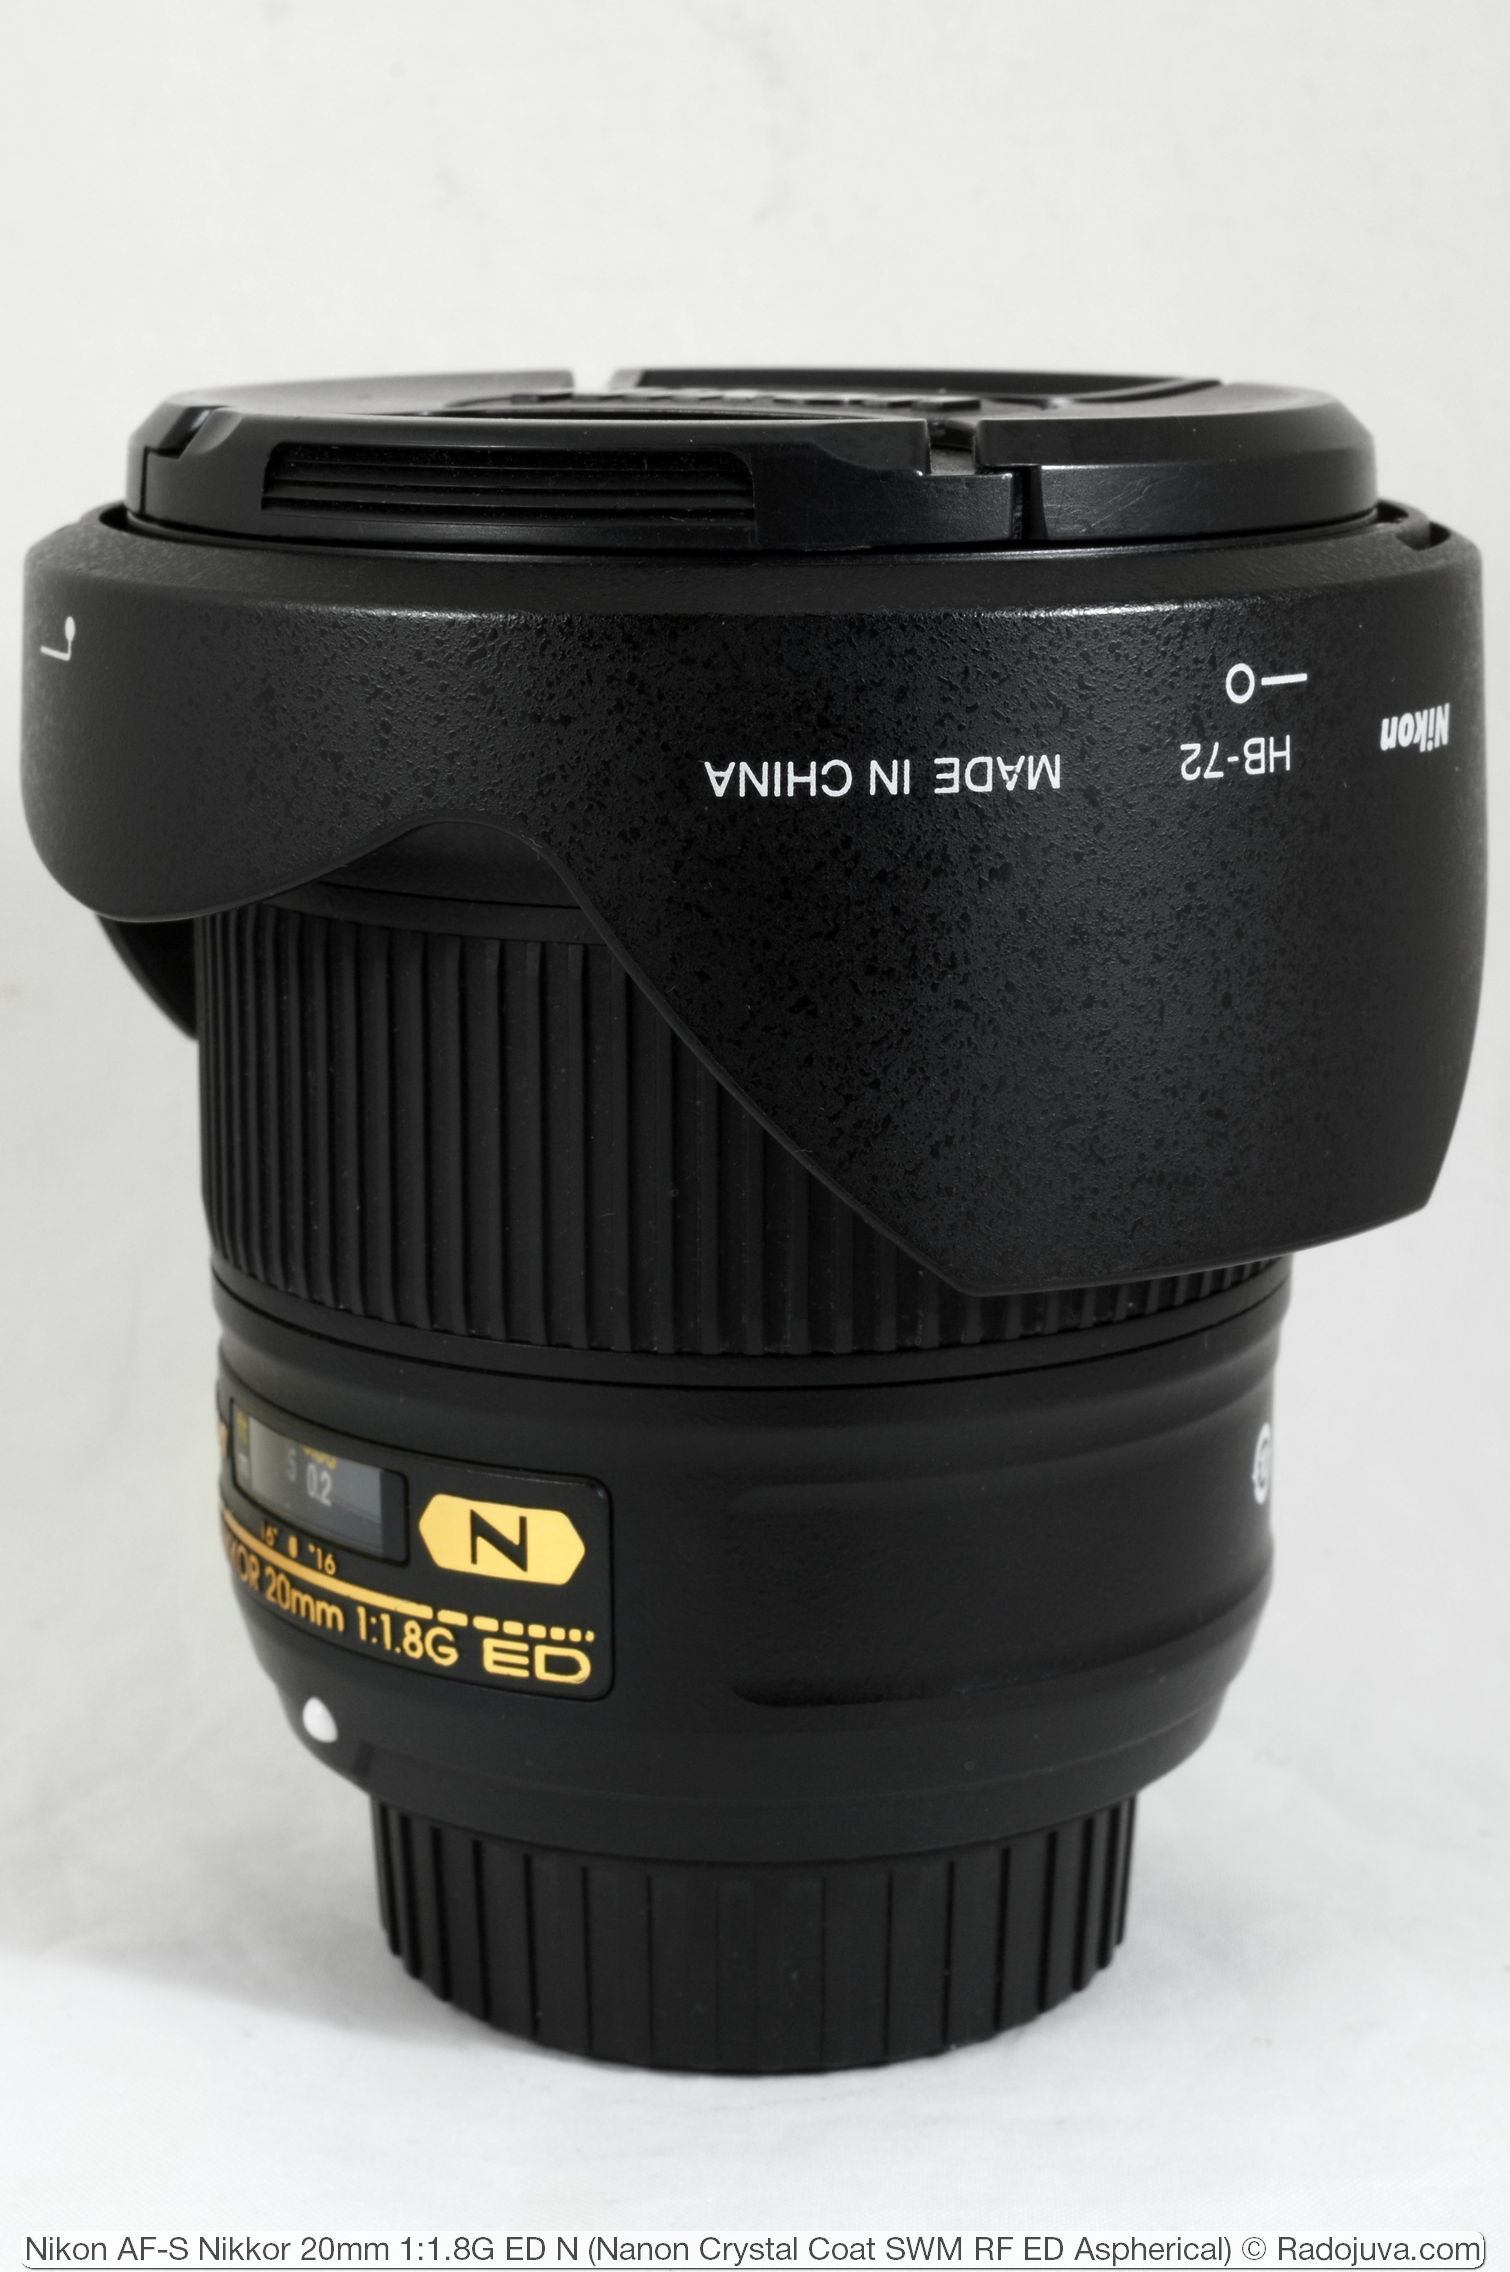 Nikon AF-S Nikkor 20mm 1:1.8G ED N (Nano Crystal Coat SWM RF ED Aspherical)